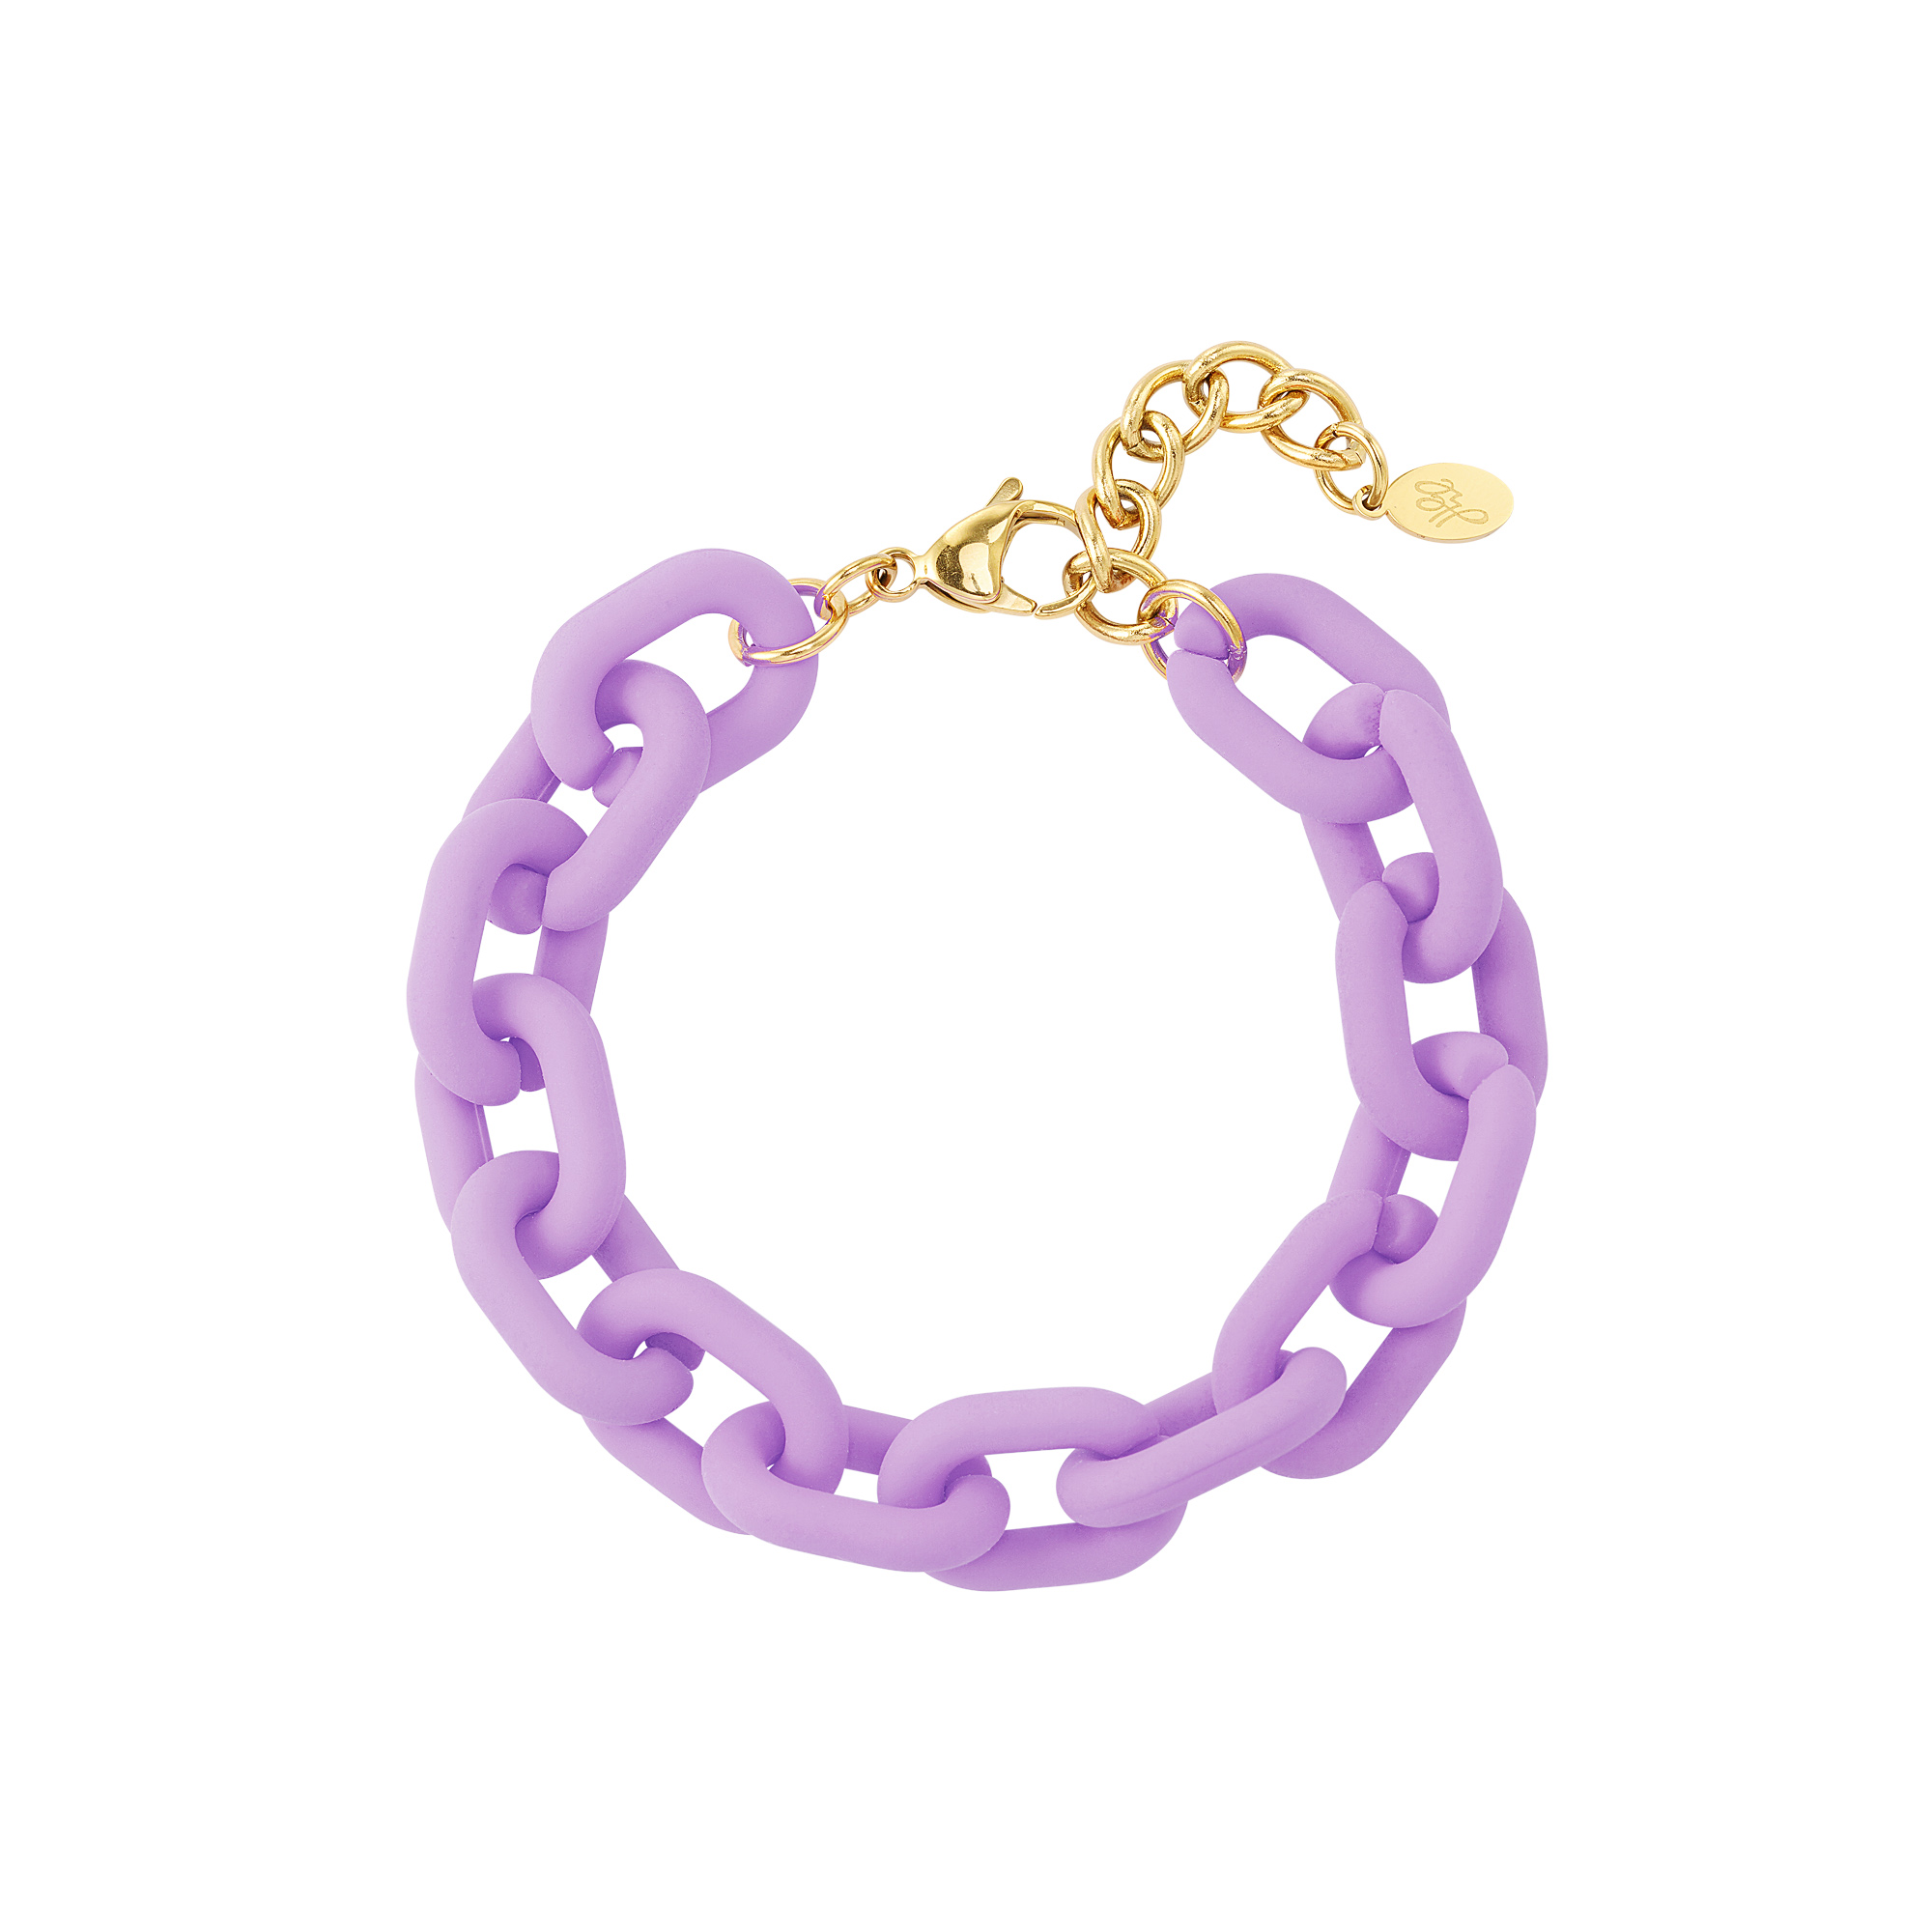 Acrylic chain bracelet colorful